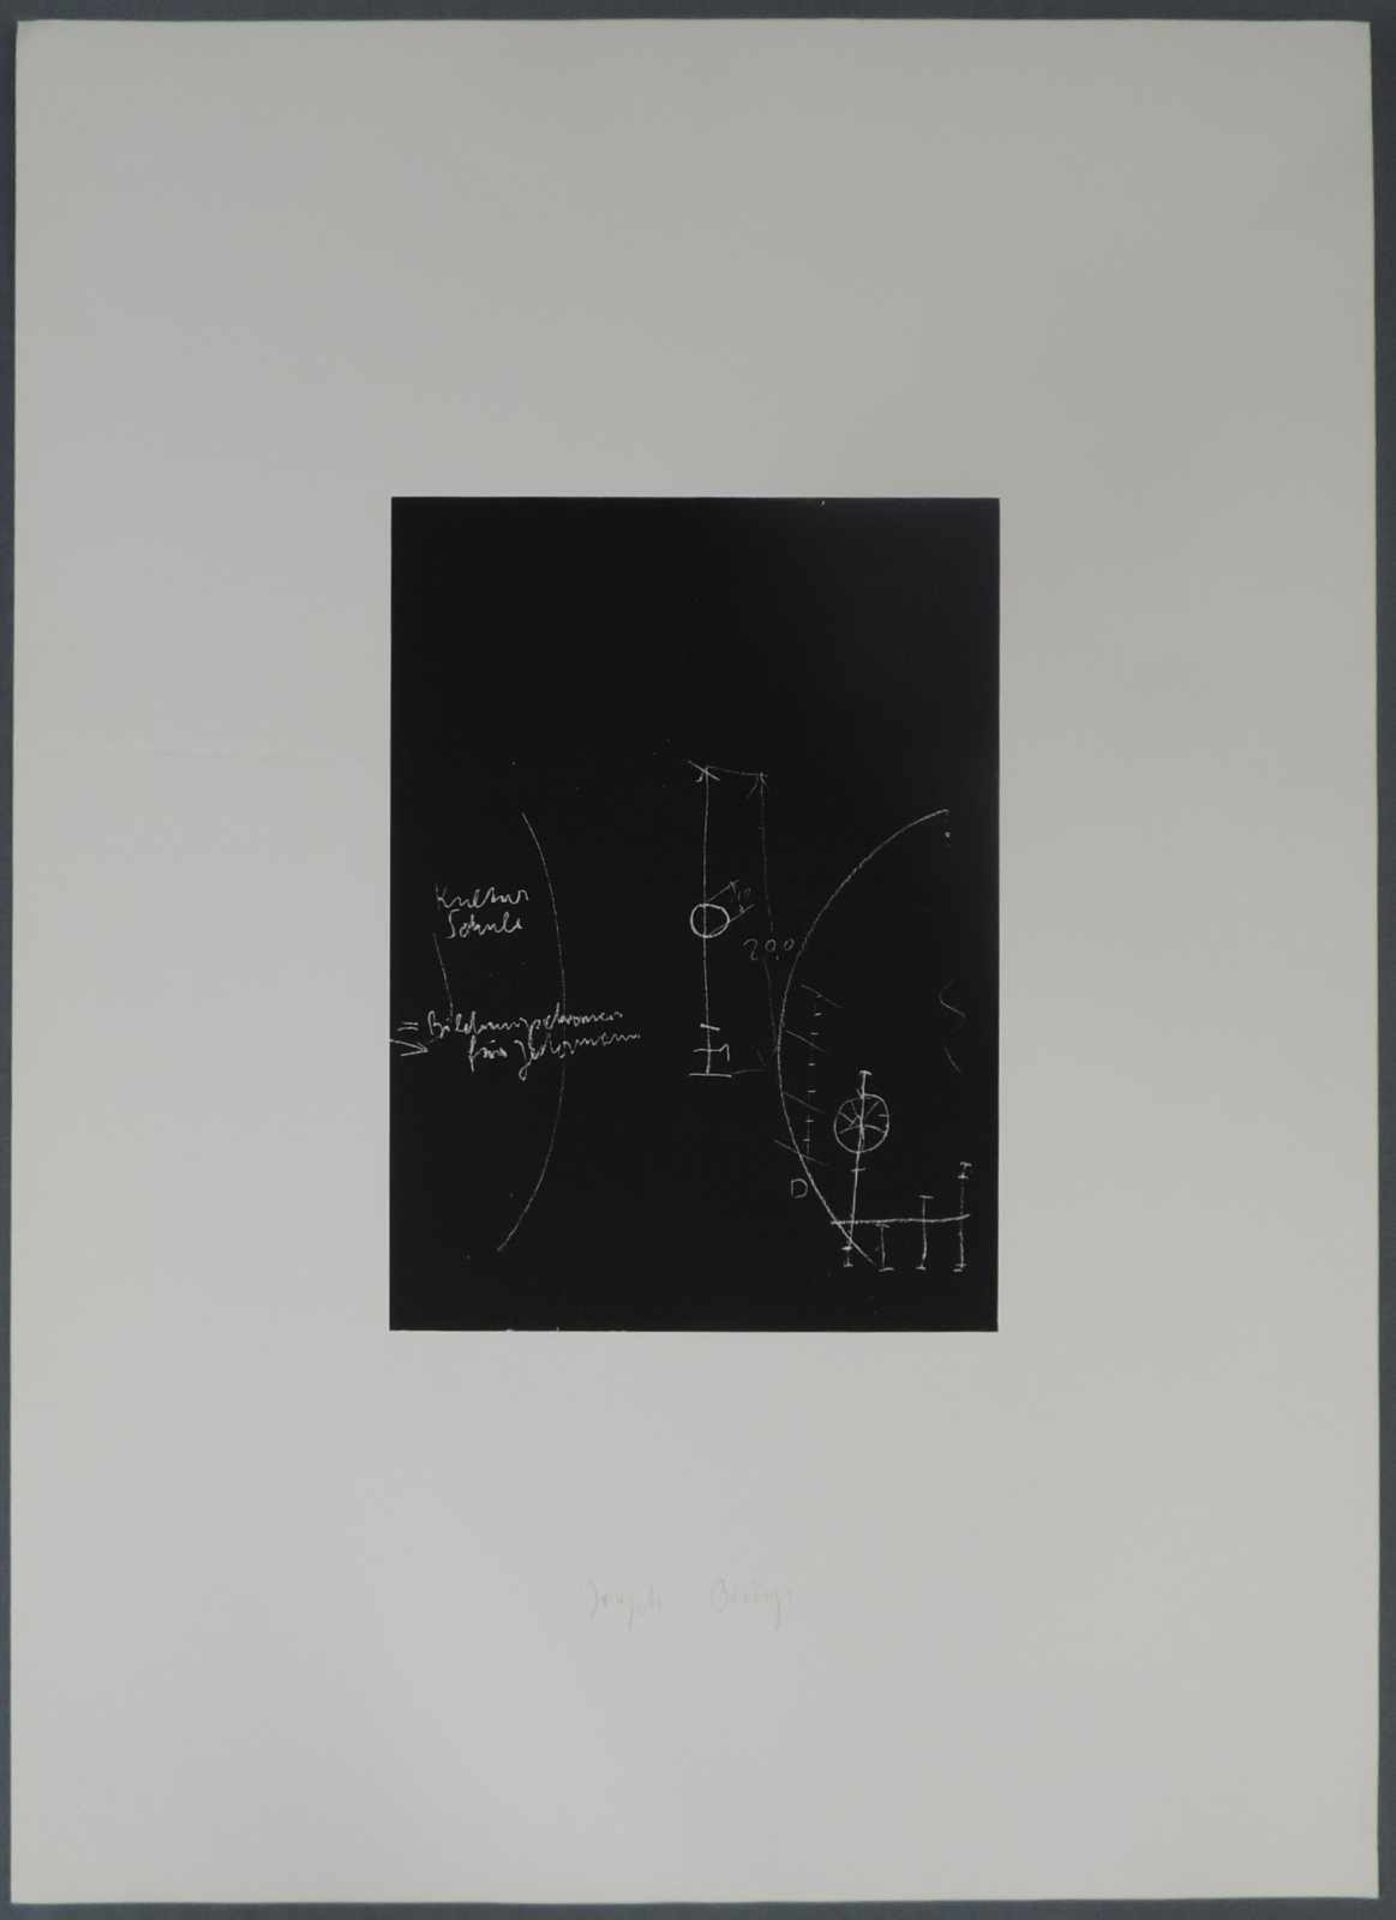 Joseph BEUYS (1921 - 1986). Tafel II (1980). 27 cm x 37 cm. Schellmann 326-328. Handsigniert. Joseph